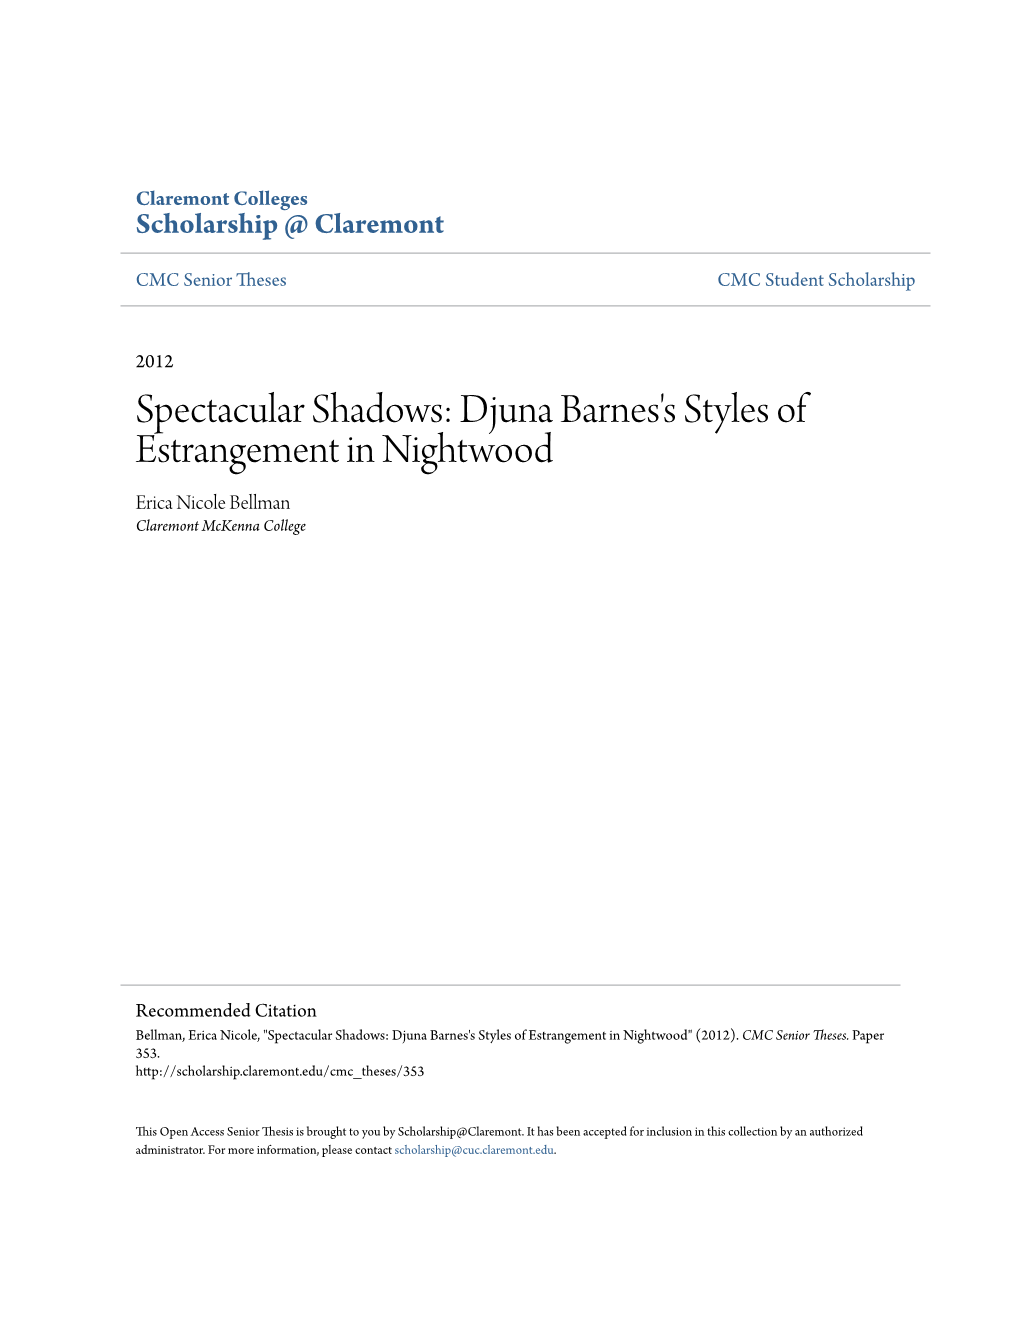 Djuna Barnes's Styles of Estrangement in Nightwood Erica Nicole Bellman Claremont Mckenna College